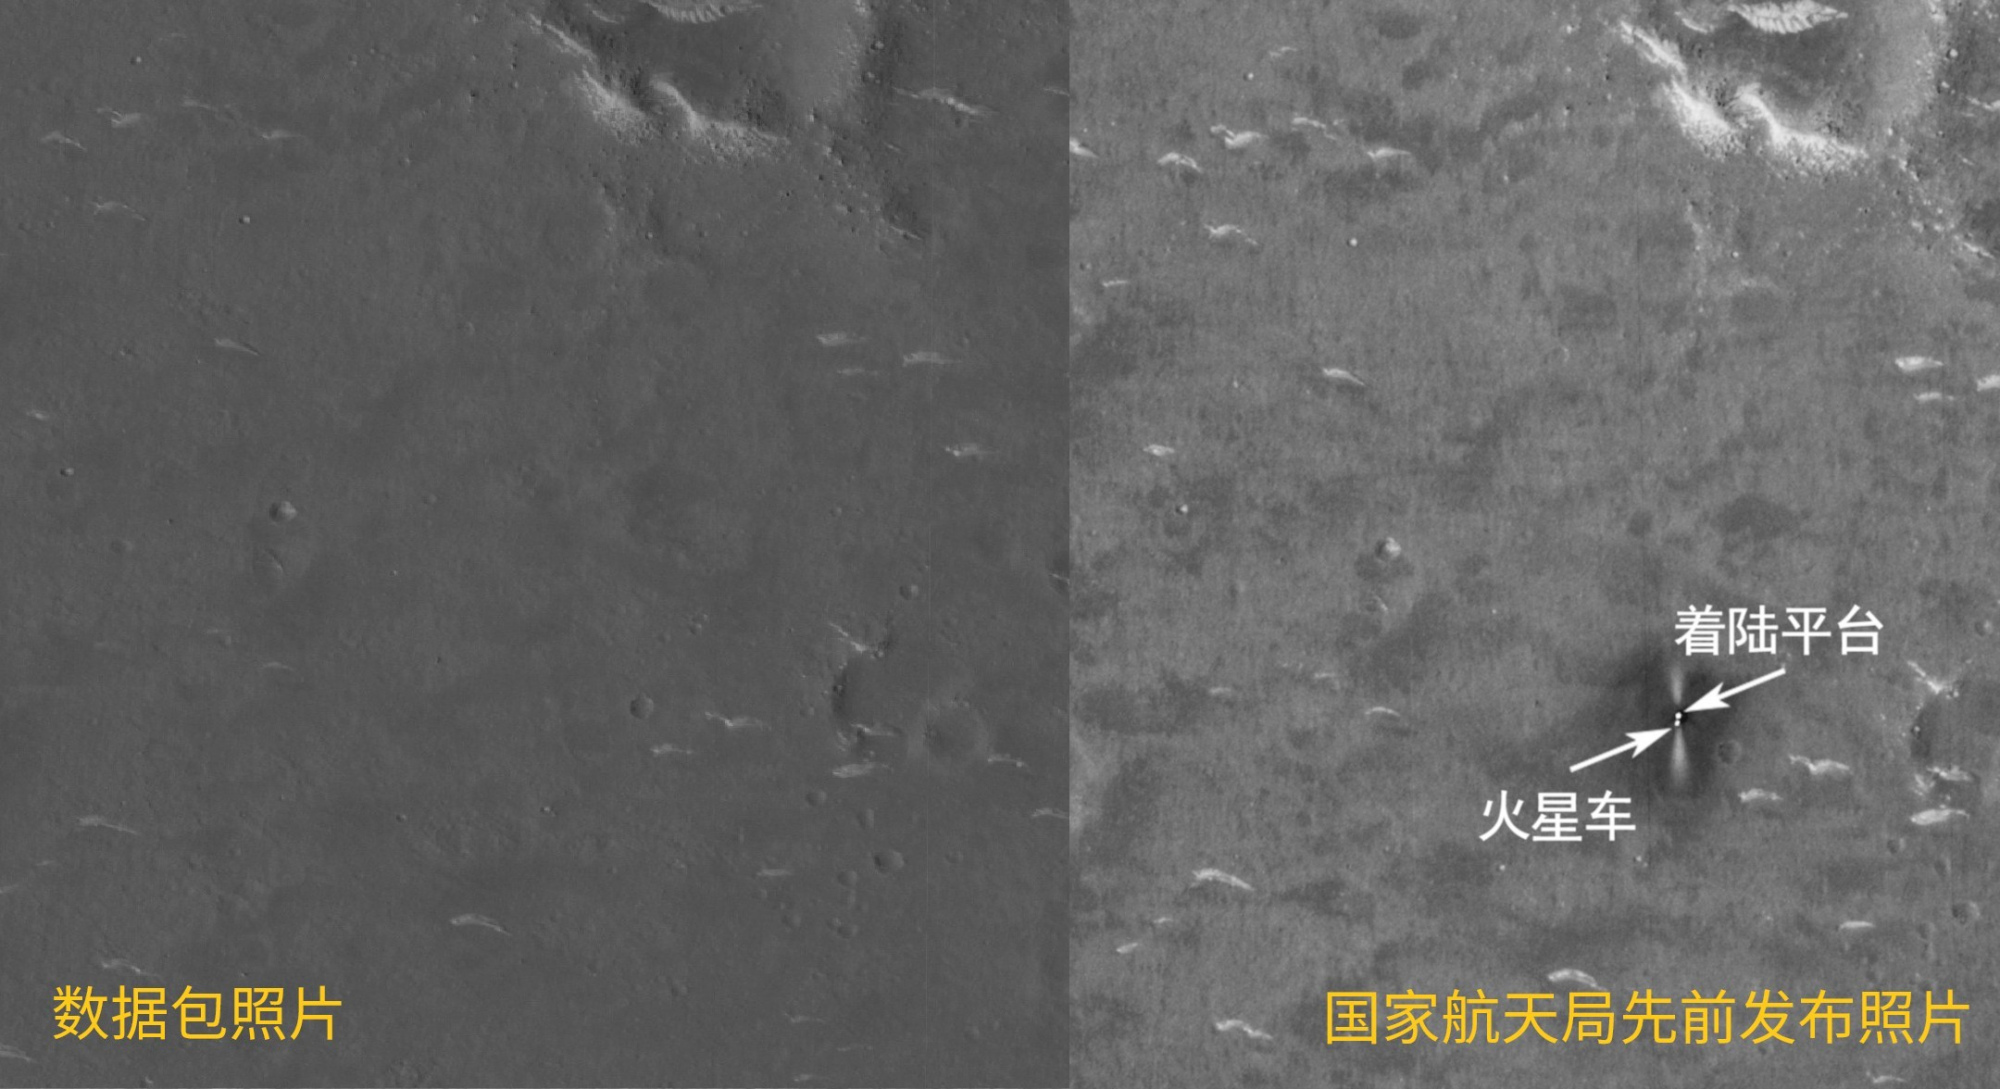 09_Tianwen-1-orbiter_HiRIC_Utopia-Planitia_landing-site_before-after.thumb.jpg.d9e1b3dd9fb438514d091b7c8c177a88.jpg